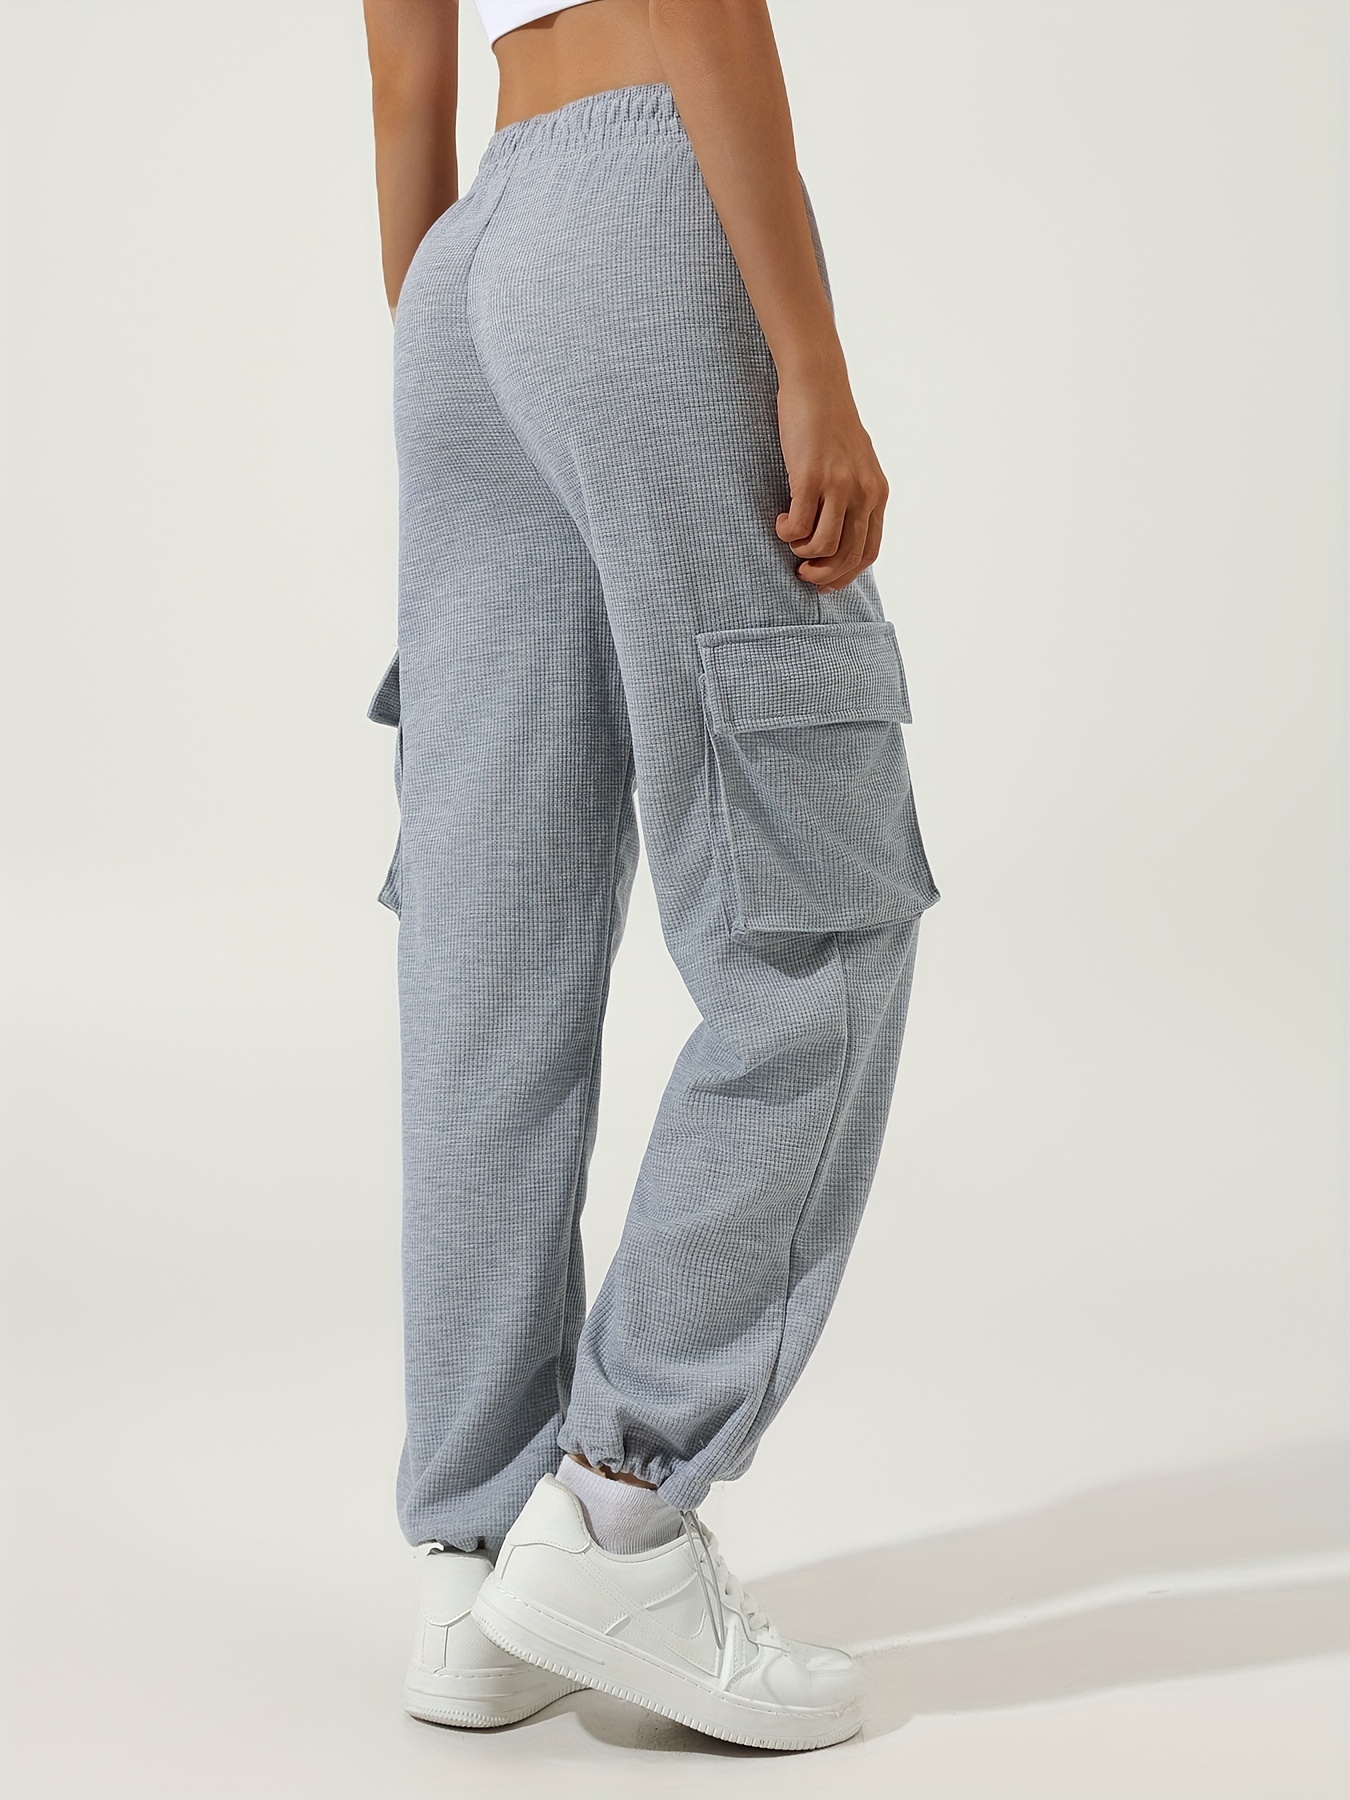 Womens Sweatpants Pockets High Waist Gym Athletic Jogger Pants